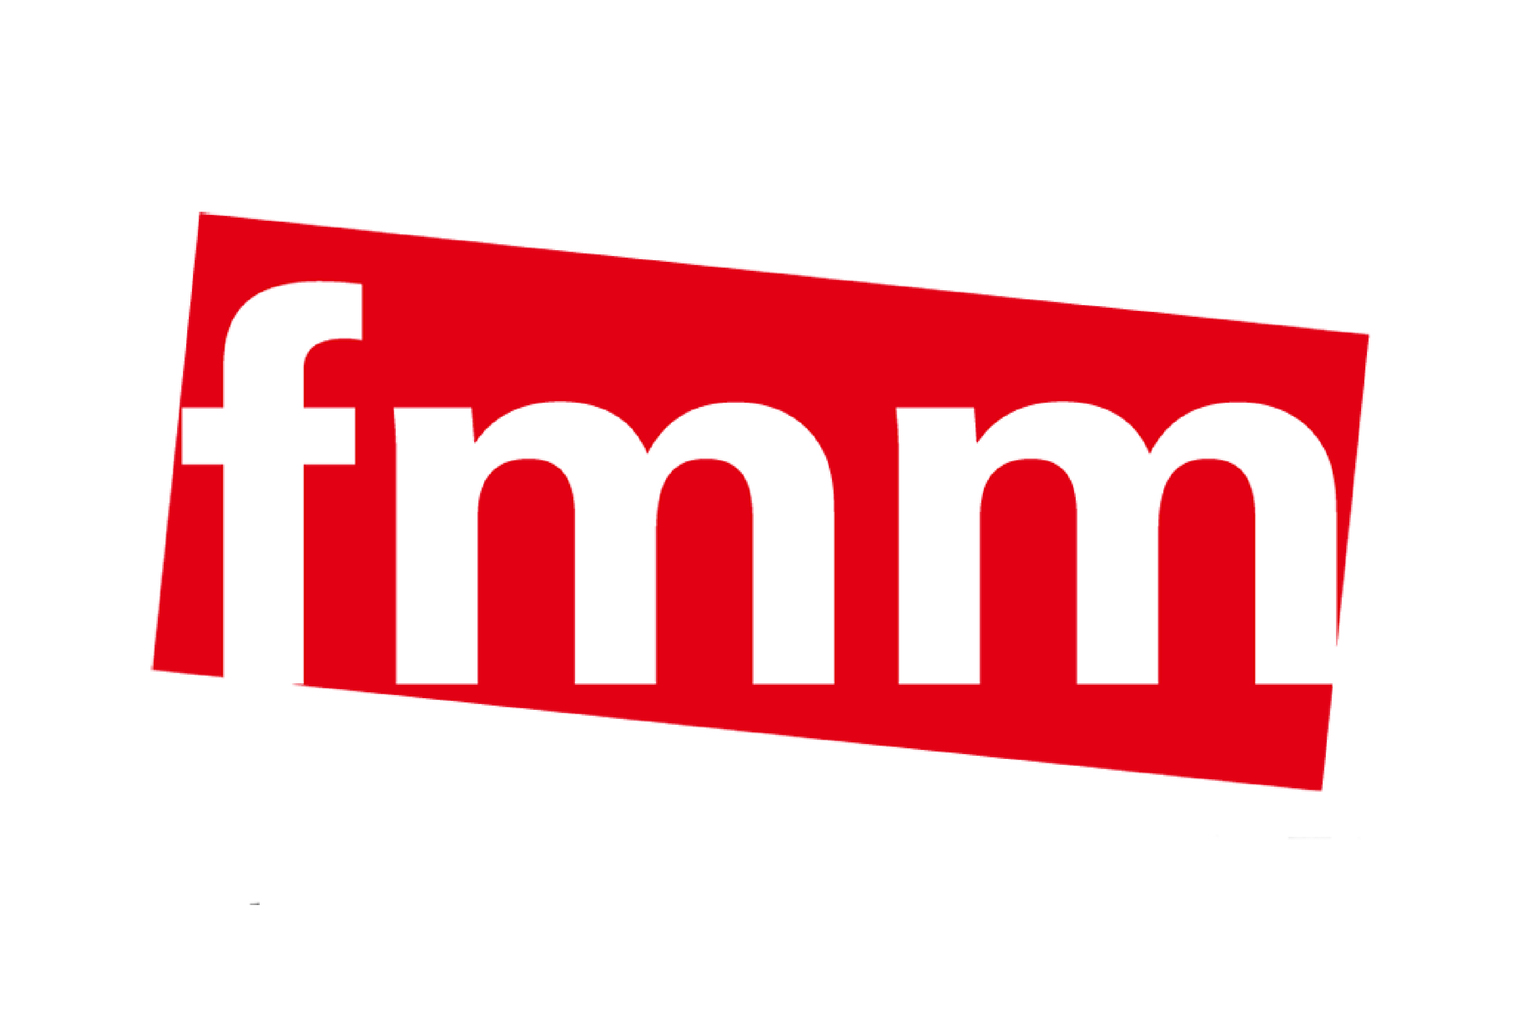 IMK Logo